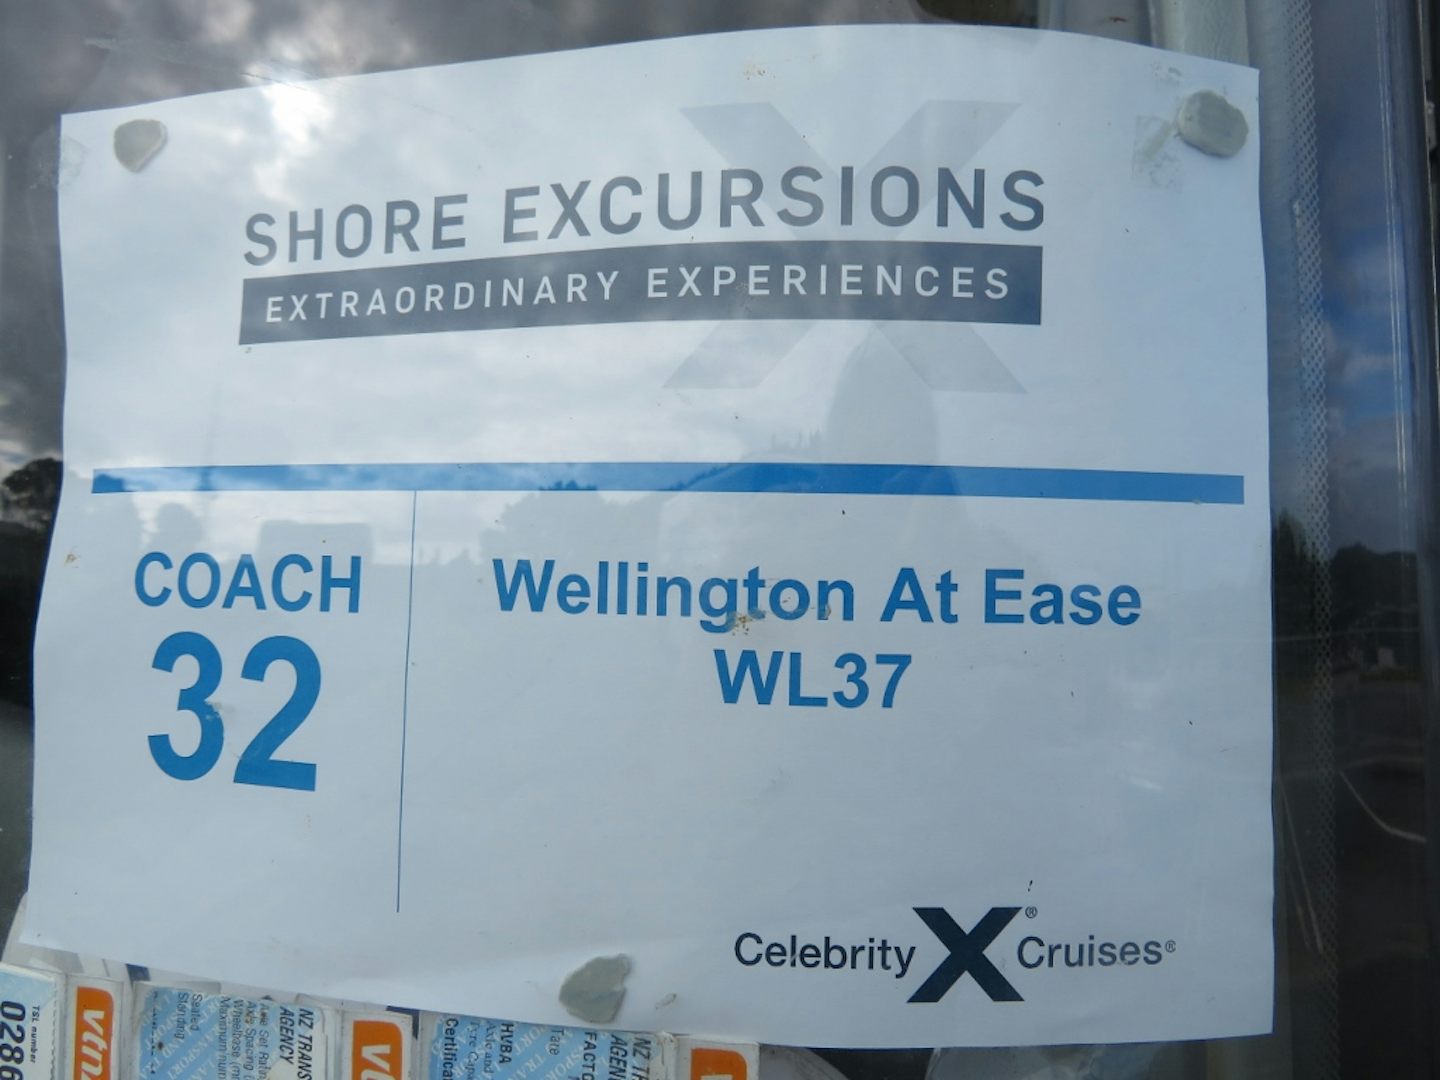 Shore excursion sticker on coach